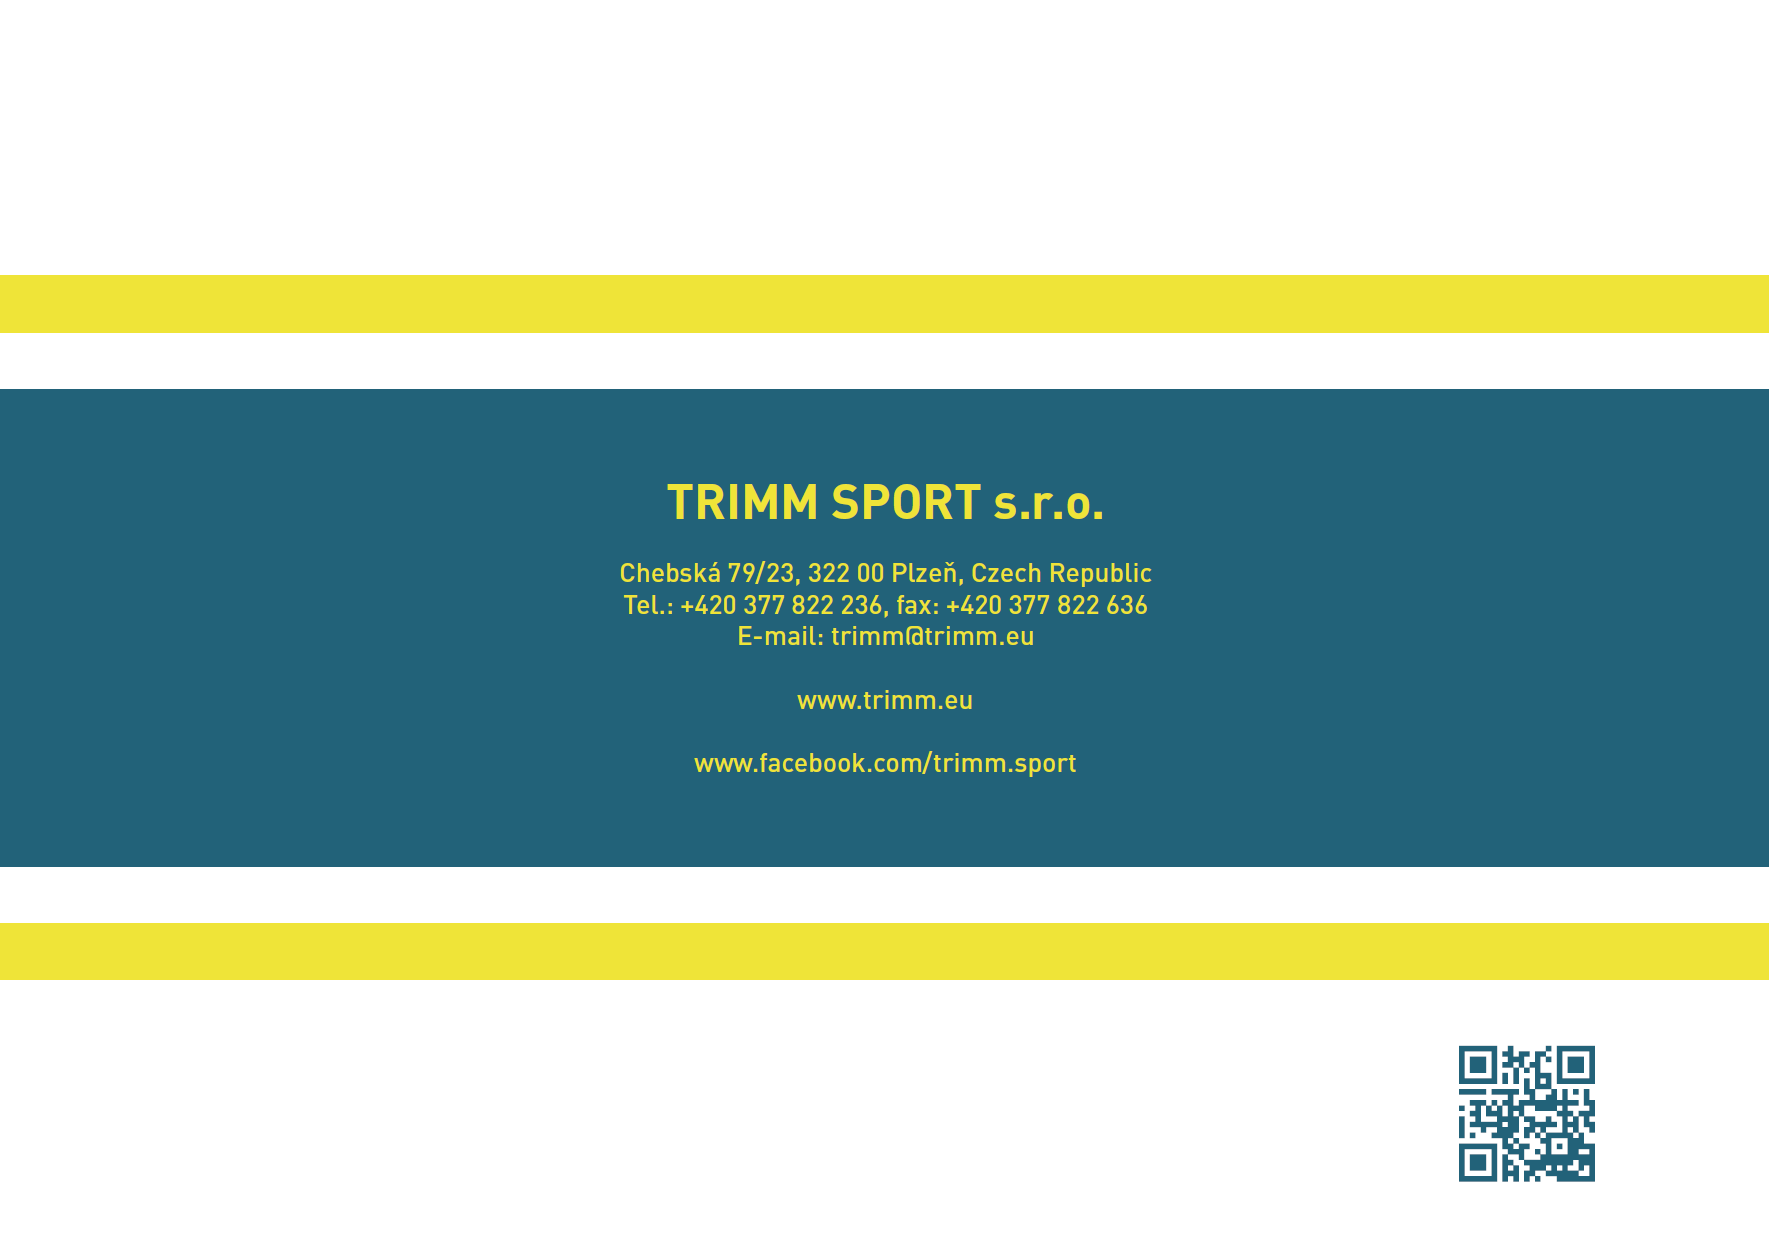 TRIMM SPORT PURE24/7 LTD Cressex High Wycombe Bucks